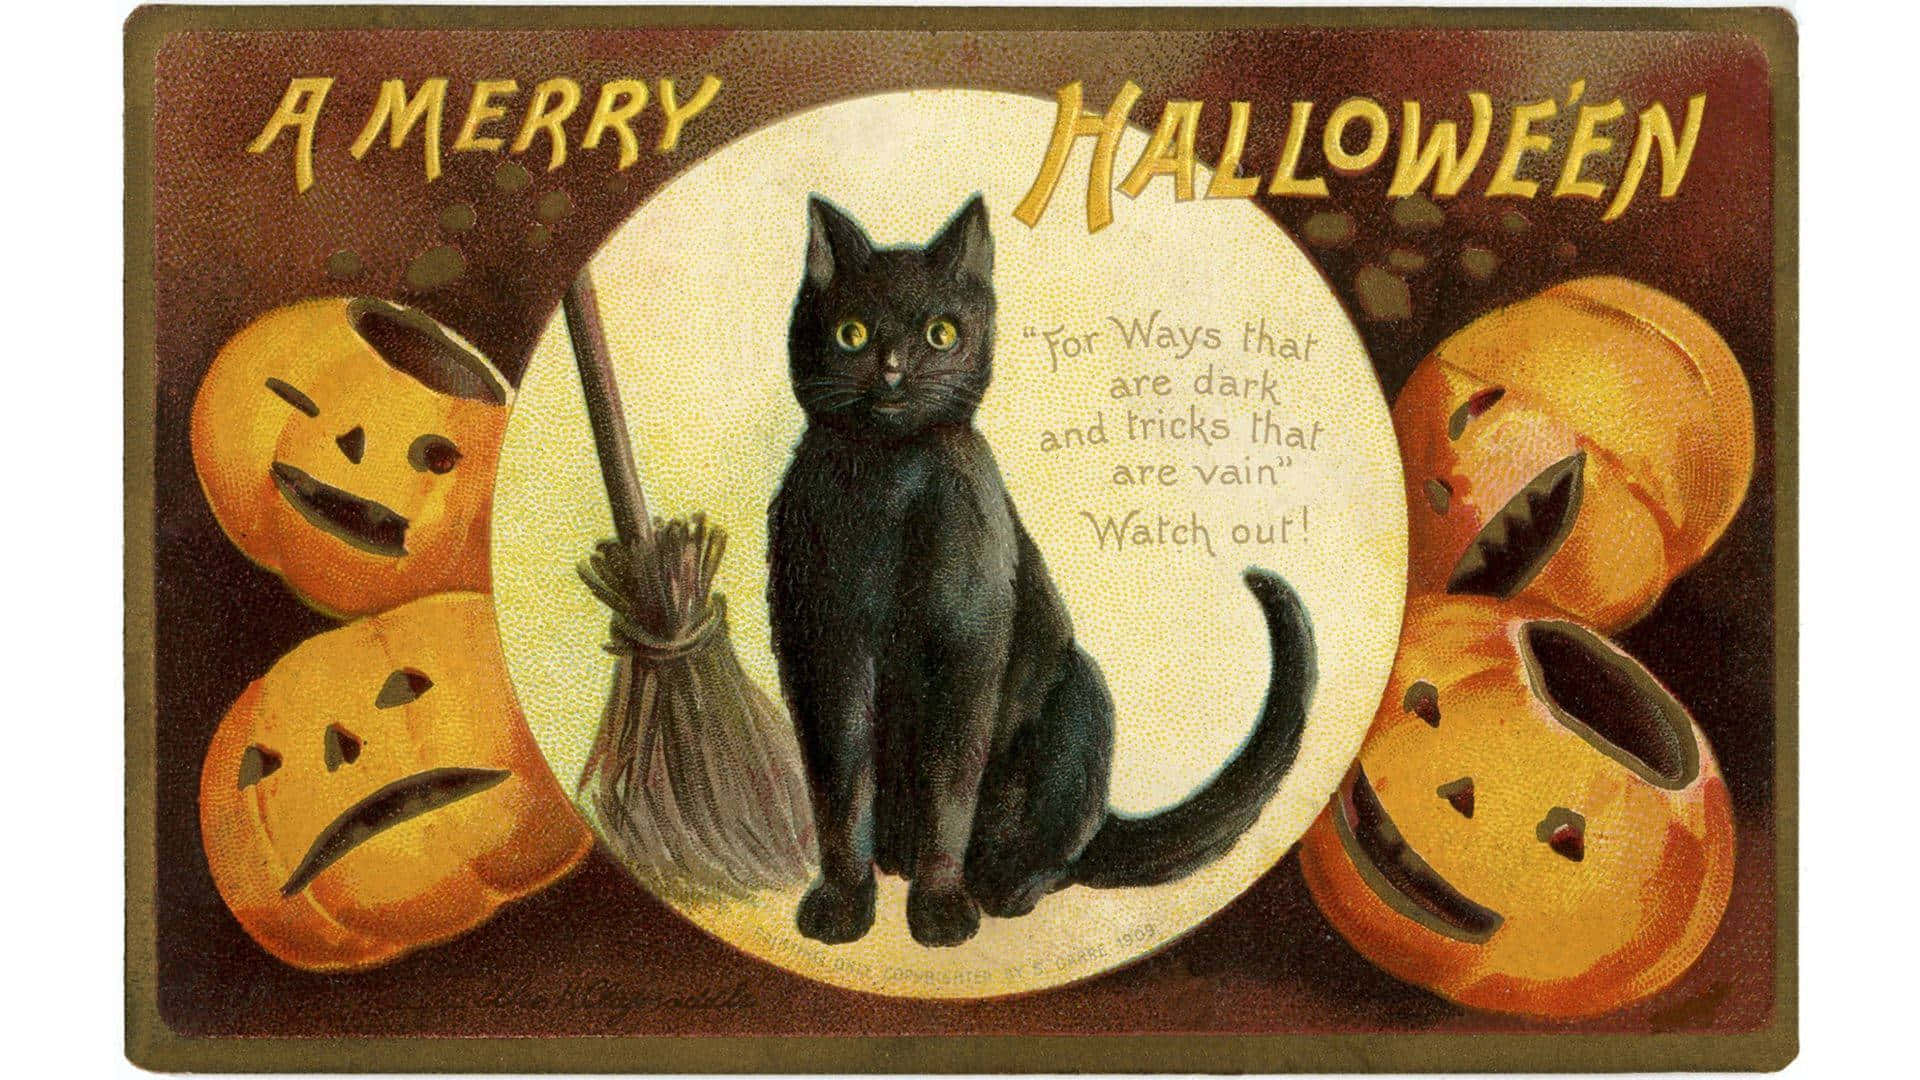 Vintage Halloween Postcardwith Black Catand Pumpkins Wallpaper